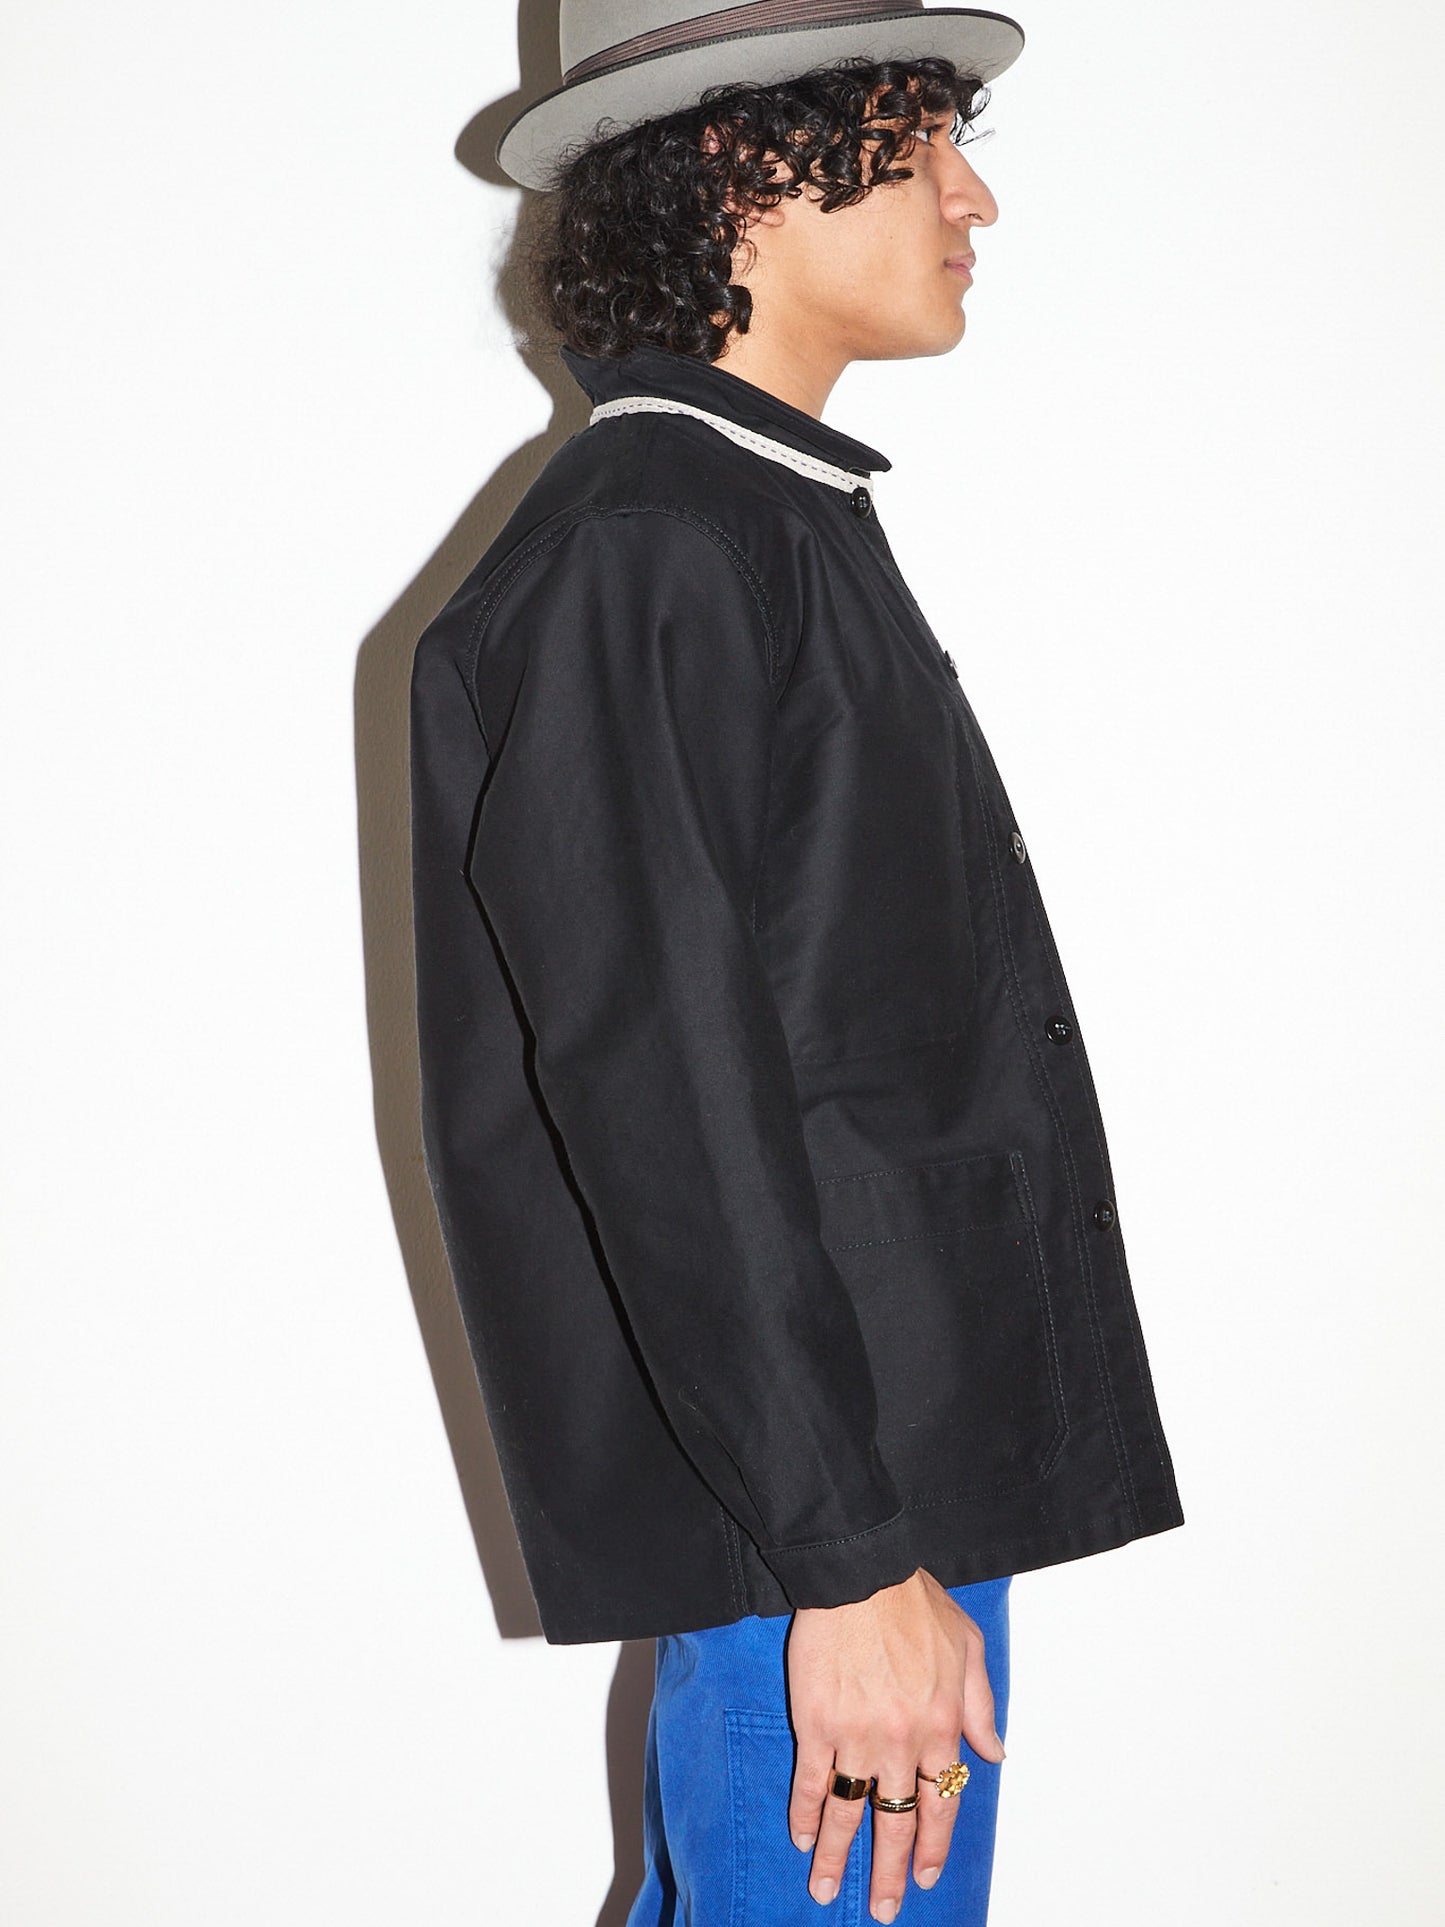 Veste de Charpentier noir (Moleskin workwear jacket)